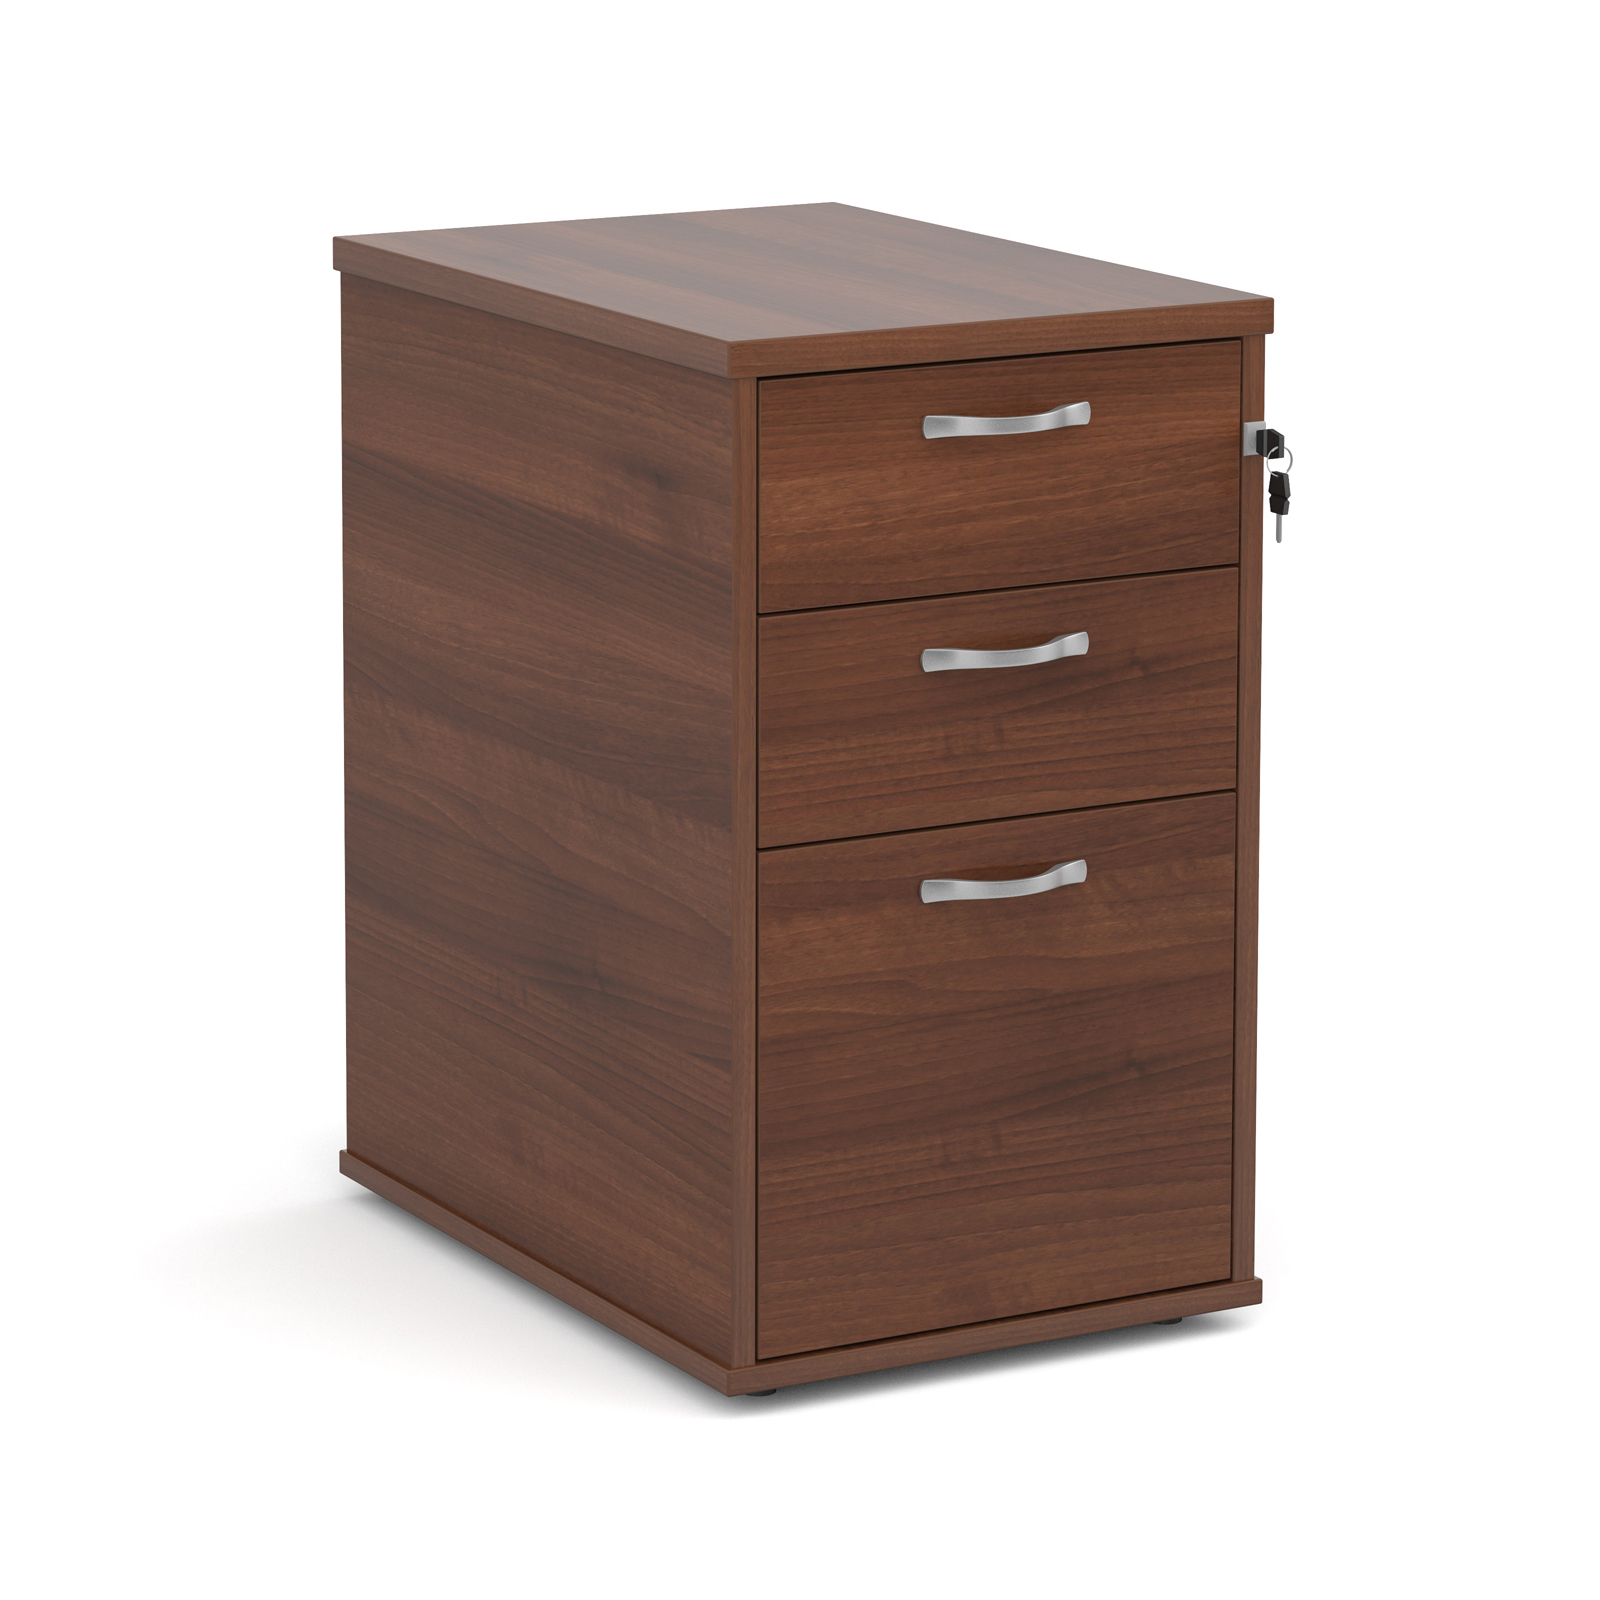 3 Drawer Desk high 3 drawer pedestal with silver handles 600mm deep - walnut